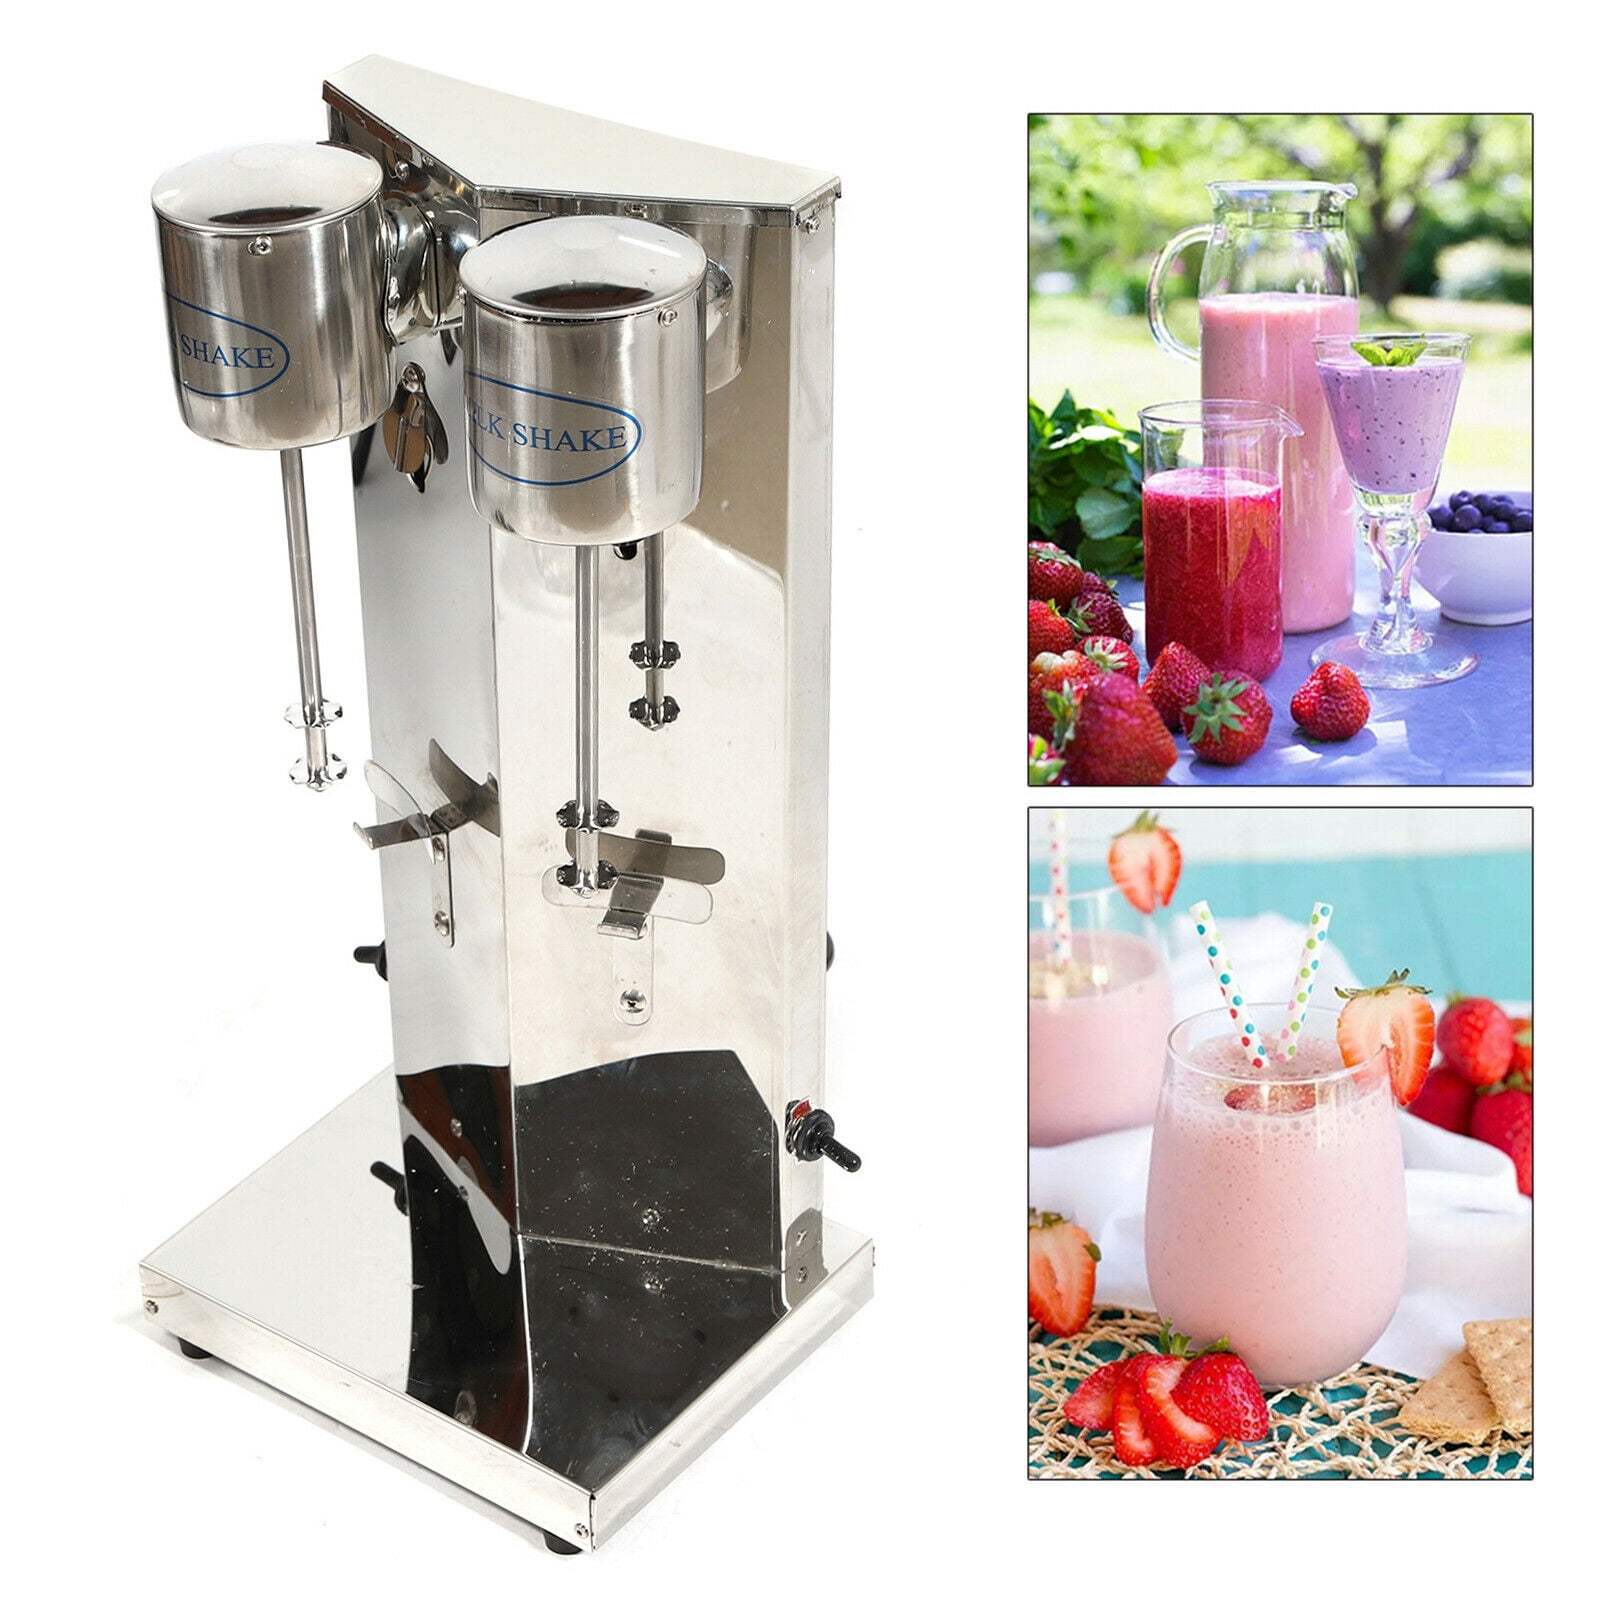 Milkshake Makers & Milkshake Machines - KaTom